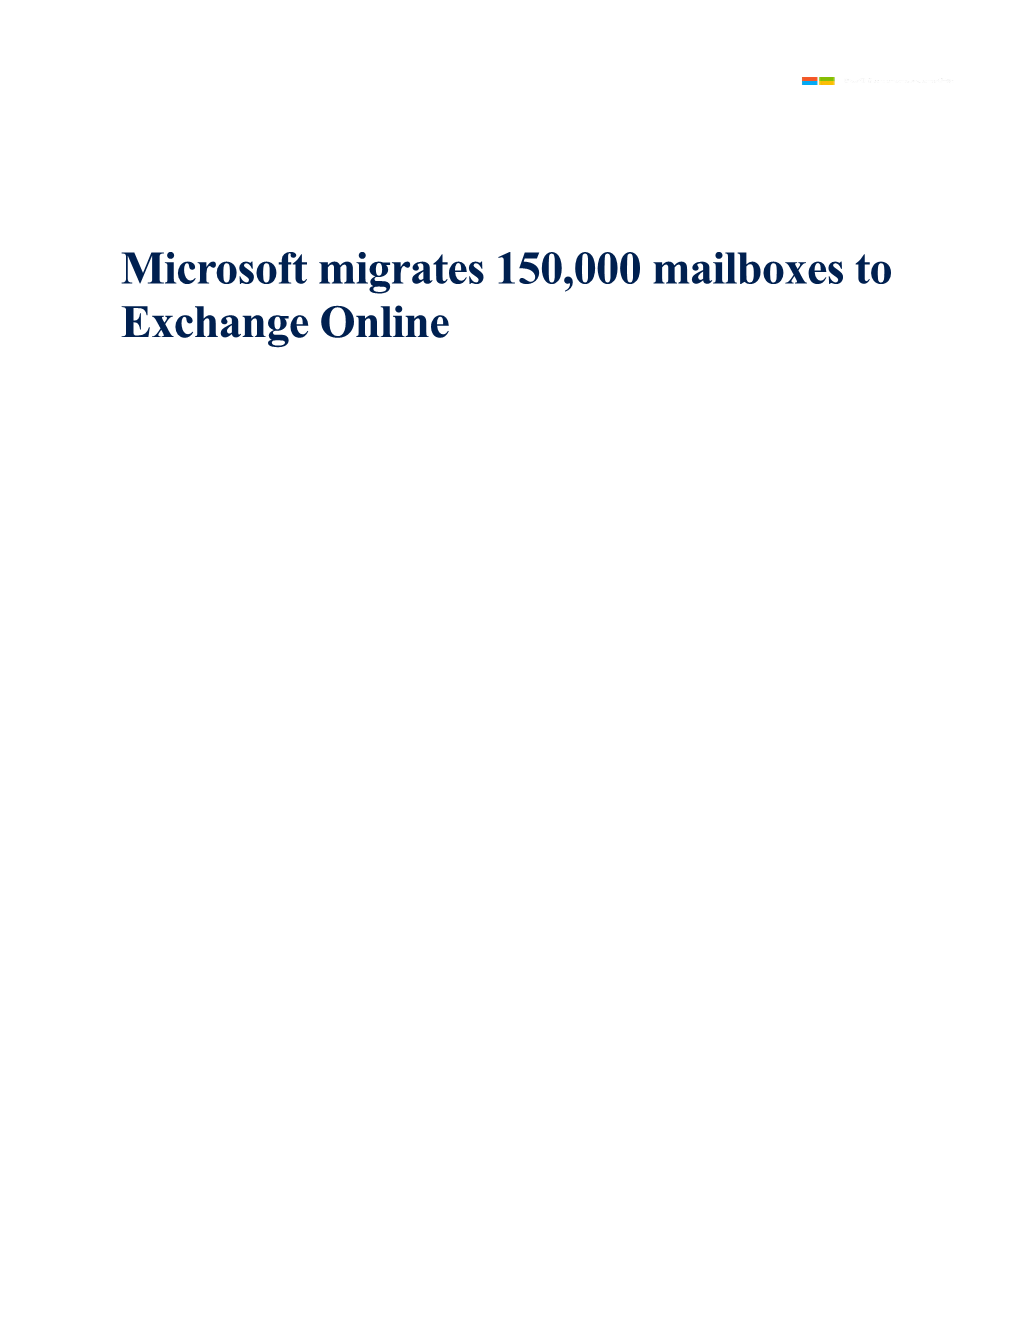 Microsoft Migrates 150,000 Mailboxes to Exchange Online